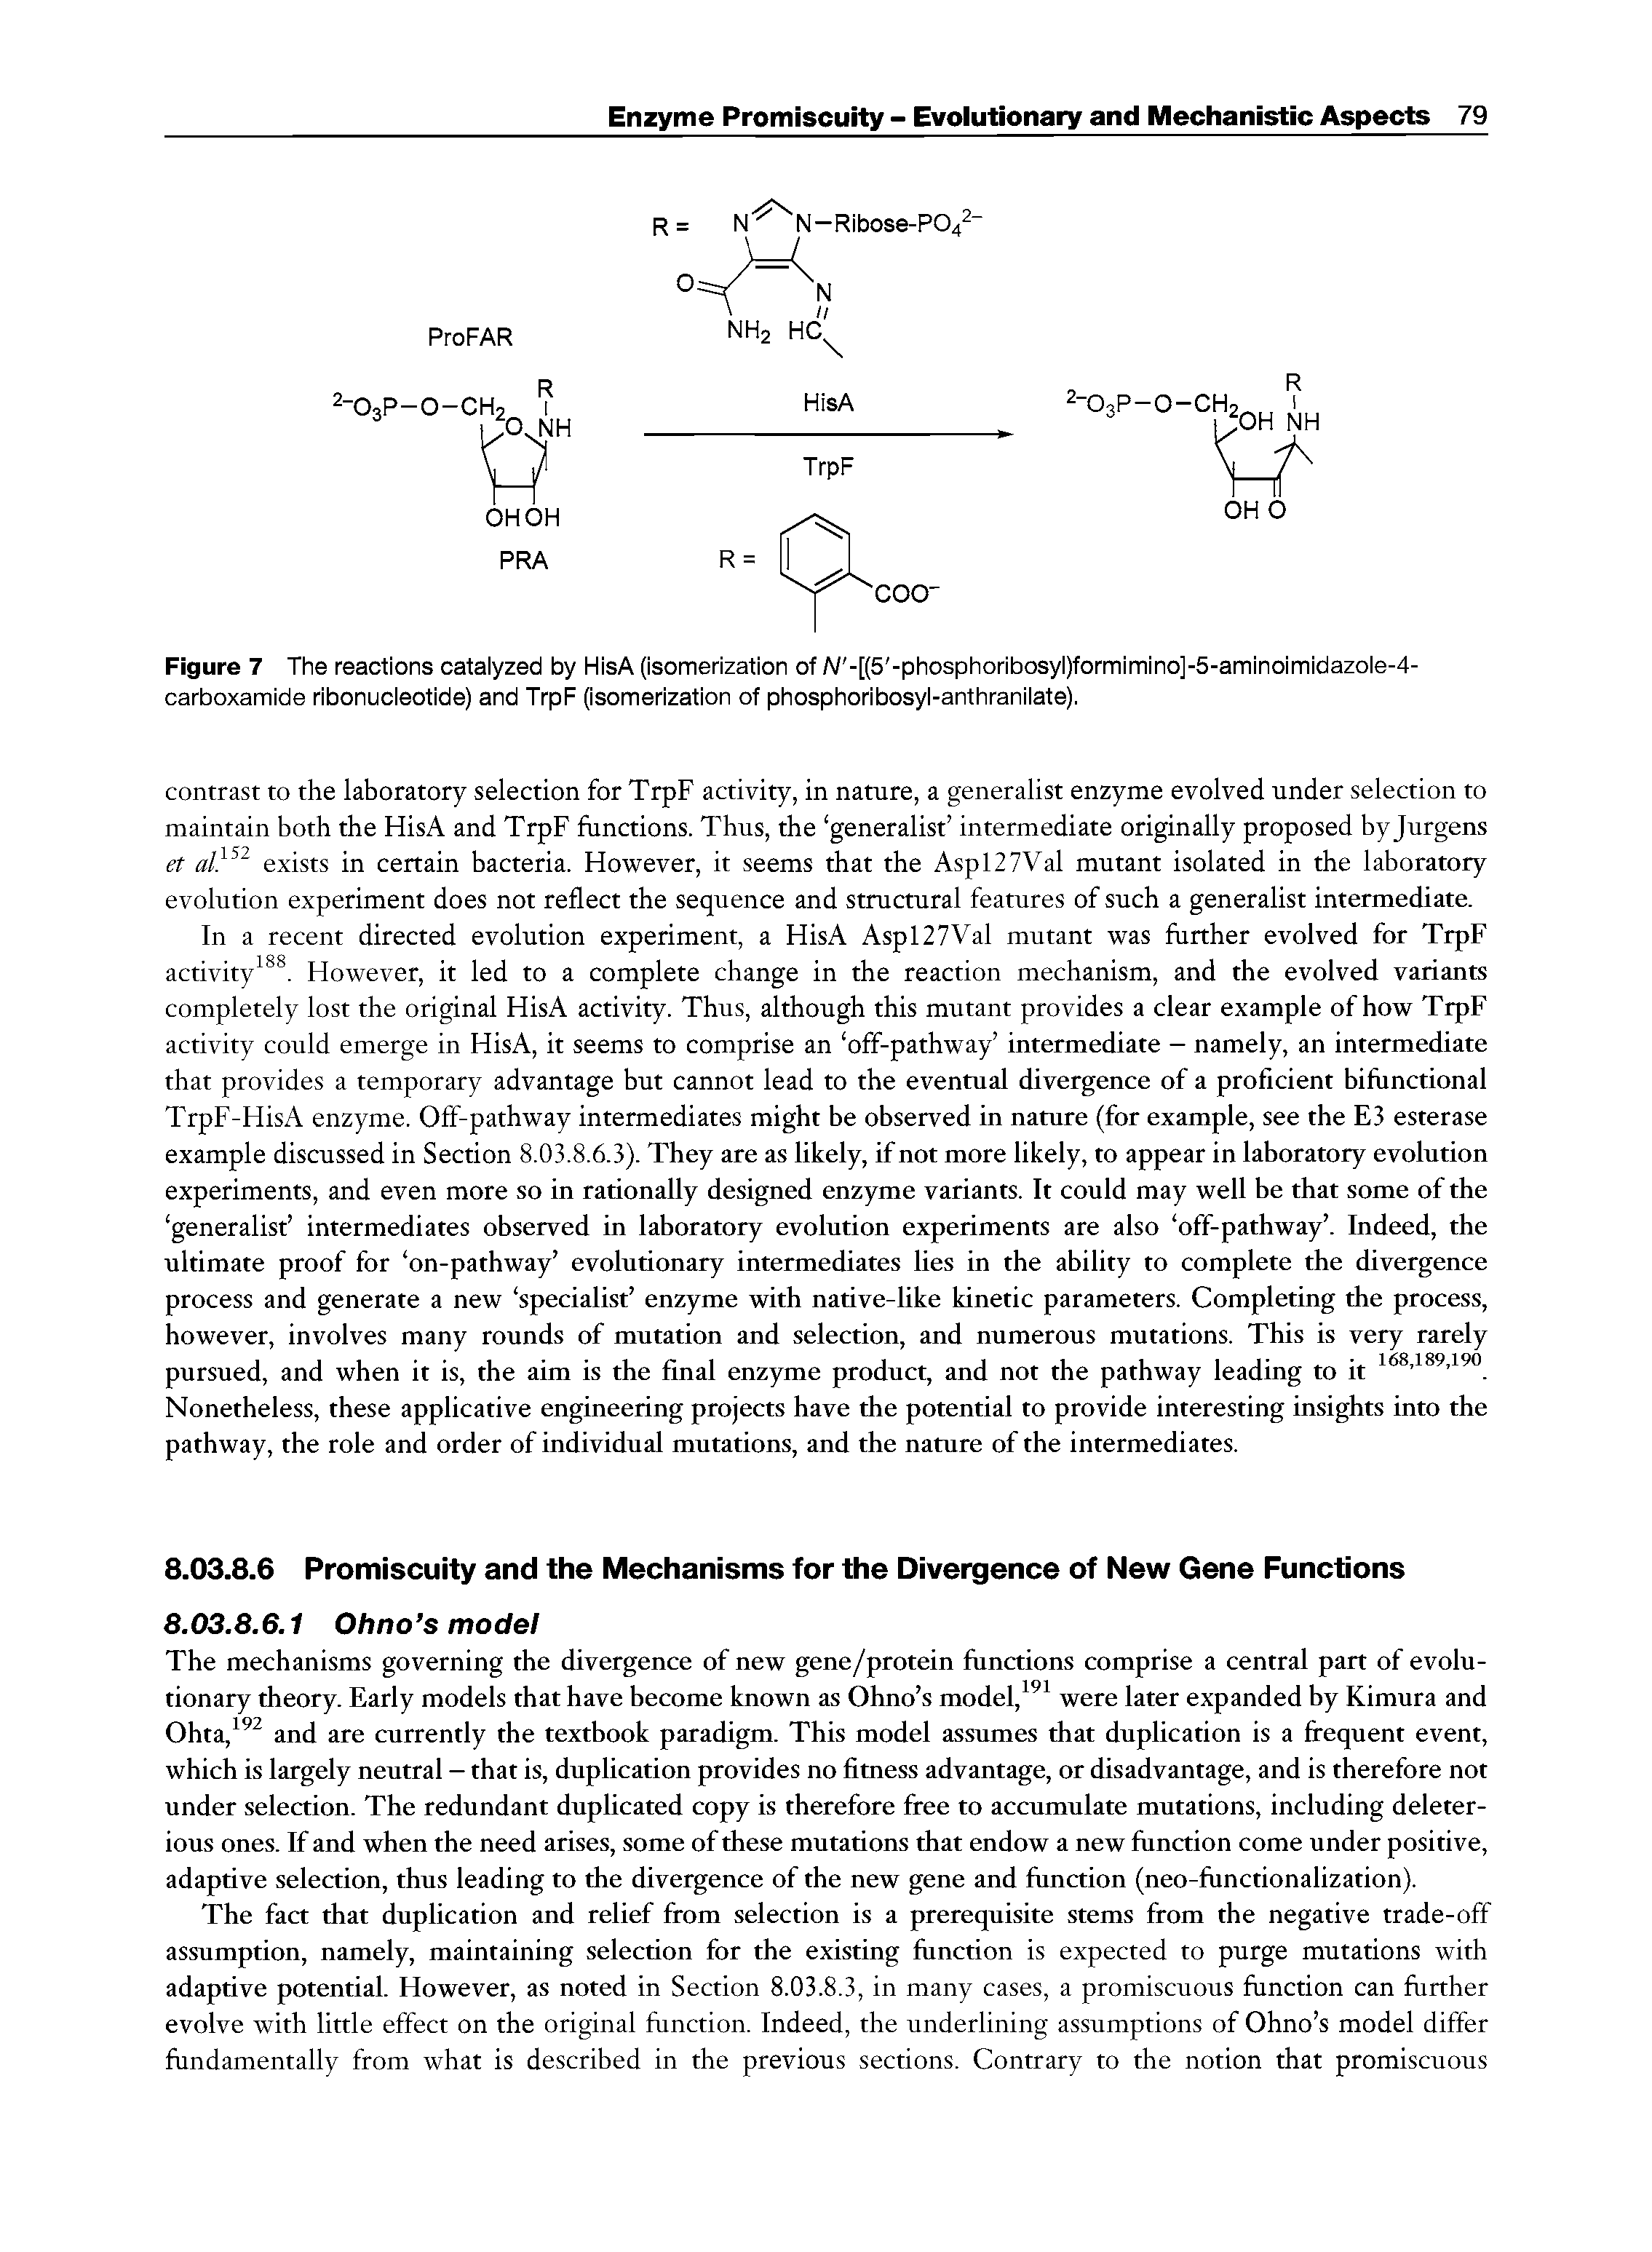 Figure 7 The reactions catalyzed by HisA (isomerization of A/ -[(5 -phosphoribosyl)formimino]-5-aminoimidazole-4-carboxamide ribonucleotide) and TrpF (isomerization of phosphoribosyl-anthranilate).